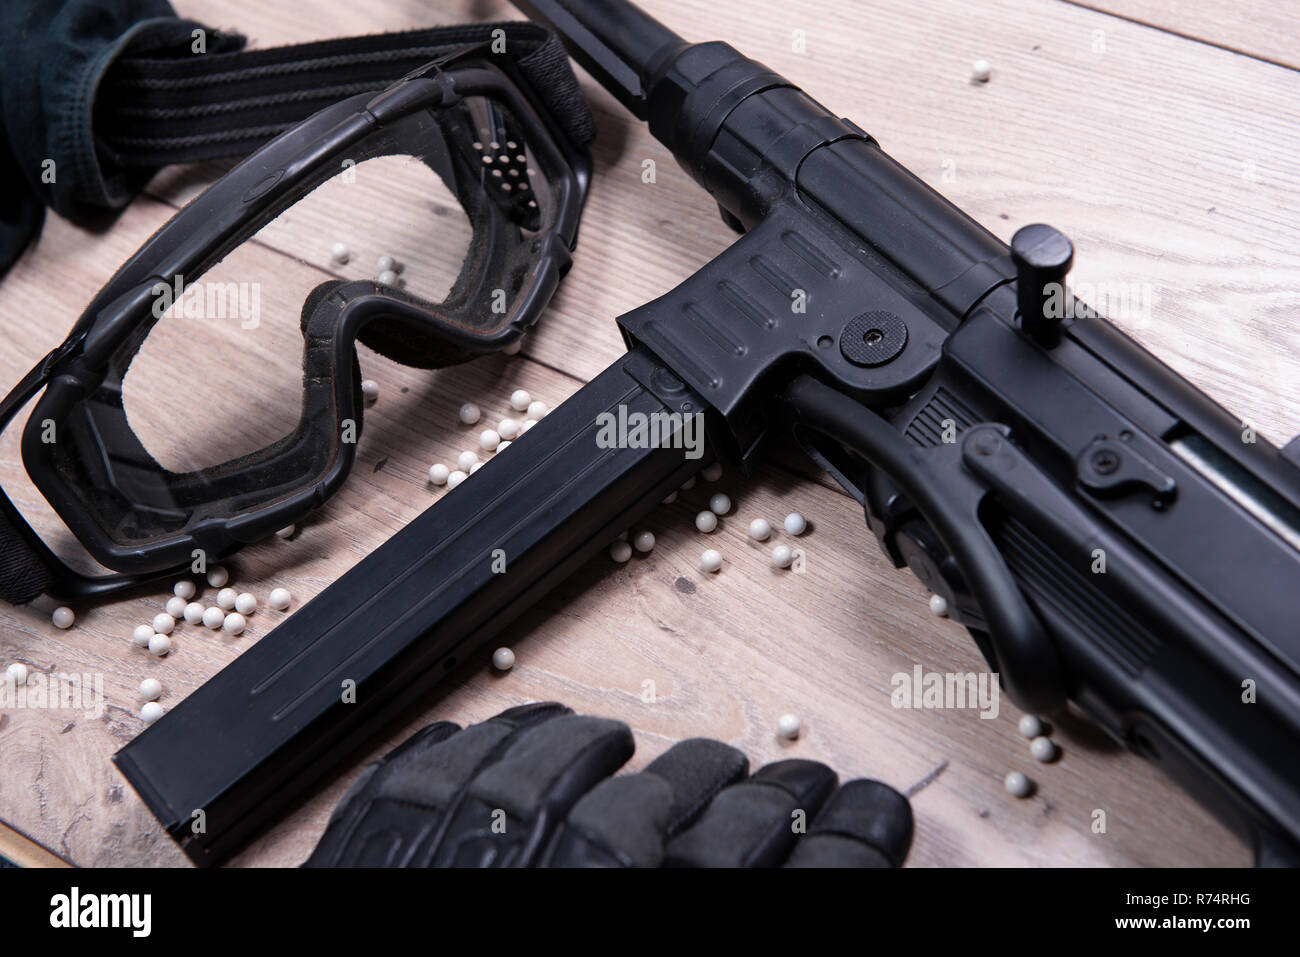 Softair gun hi-res stock photography and images - Alamy